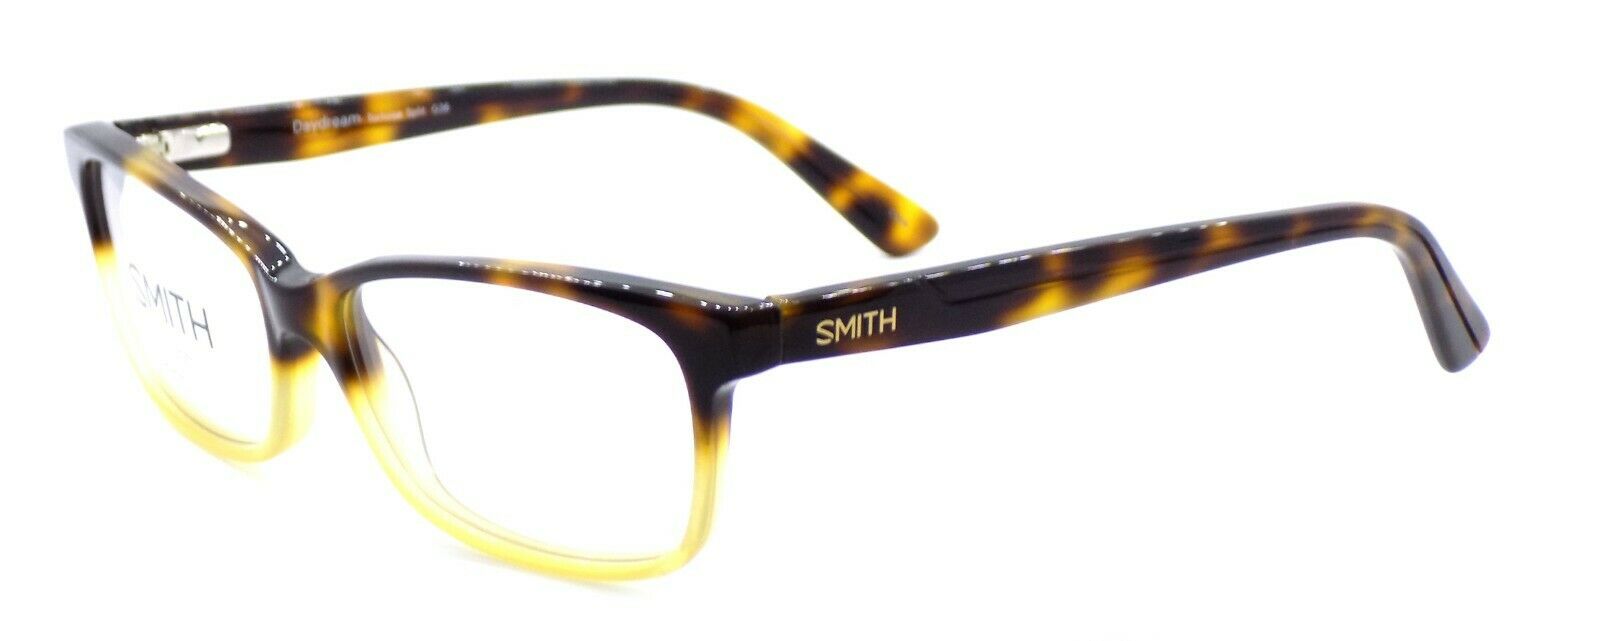 1-SMITH Optics Daydream G36 Women's Eyeglasses Frames 53-15-130 Tortoise Split-716737723081-IKSpecs